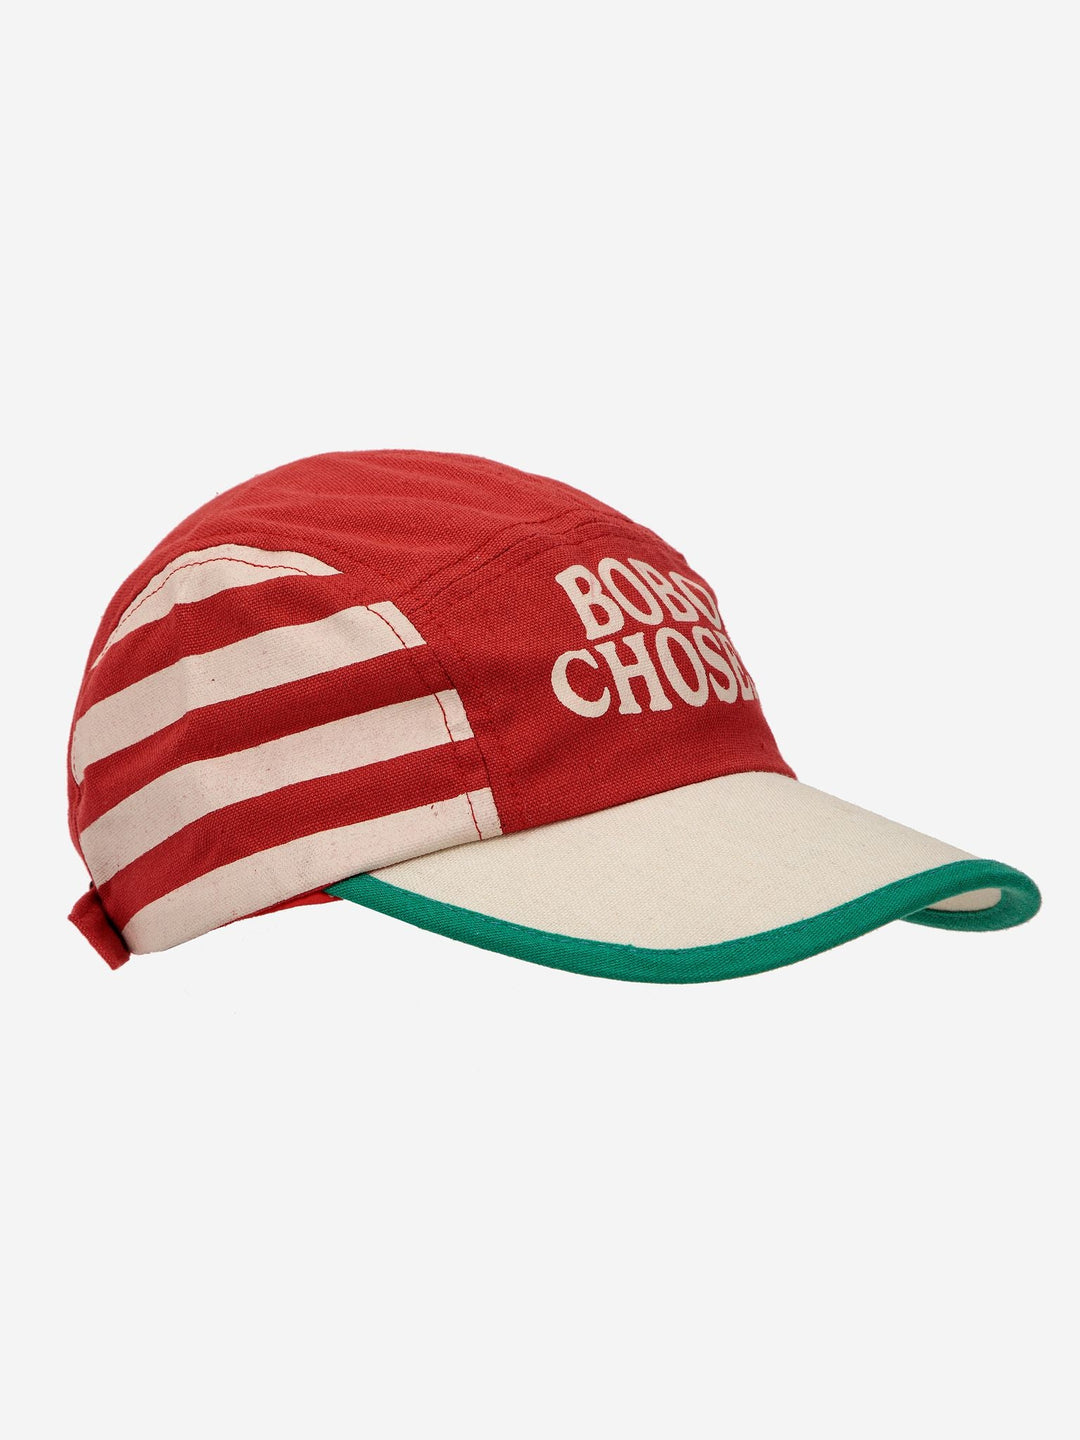 Bobo Choses Red Stripes Cap - Red - Posh New York